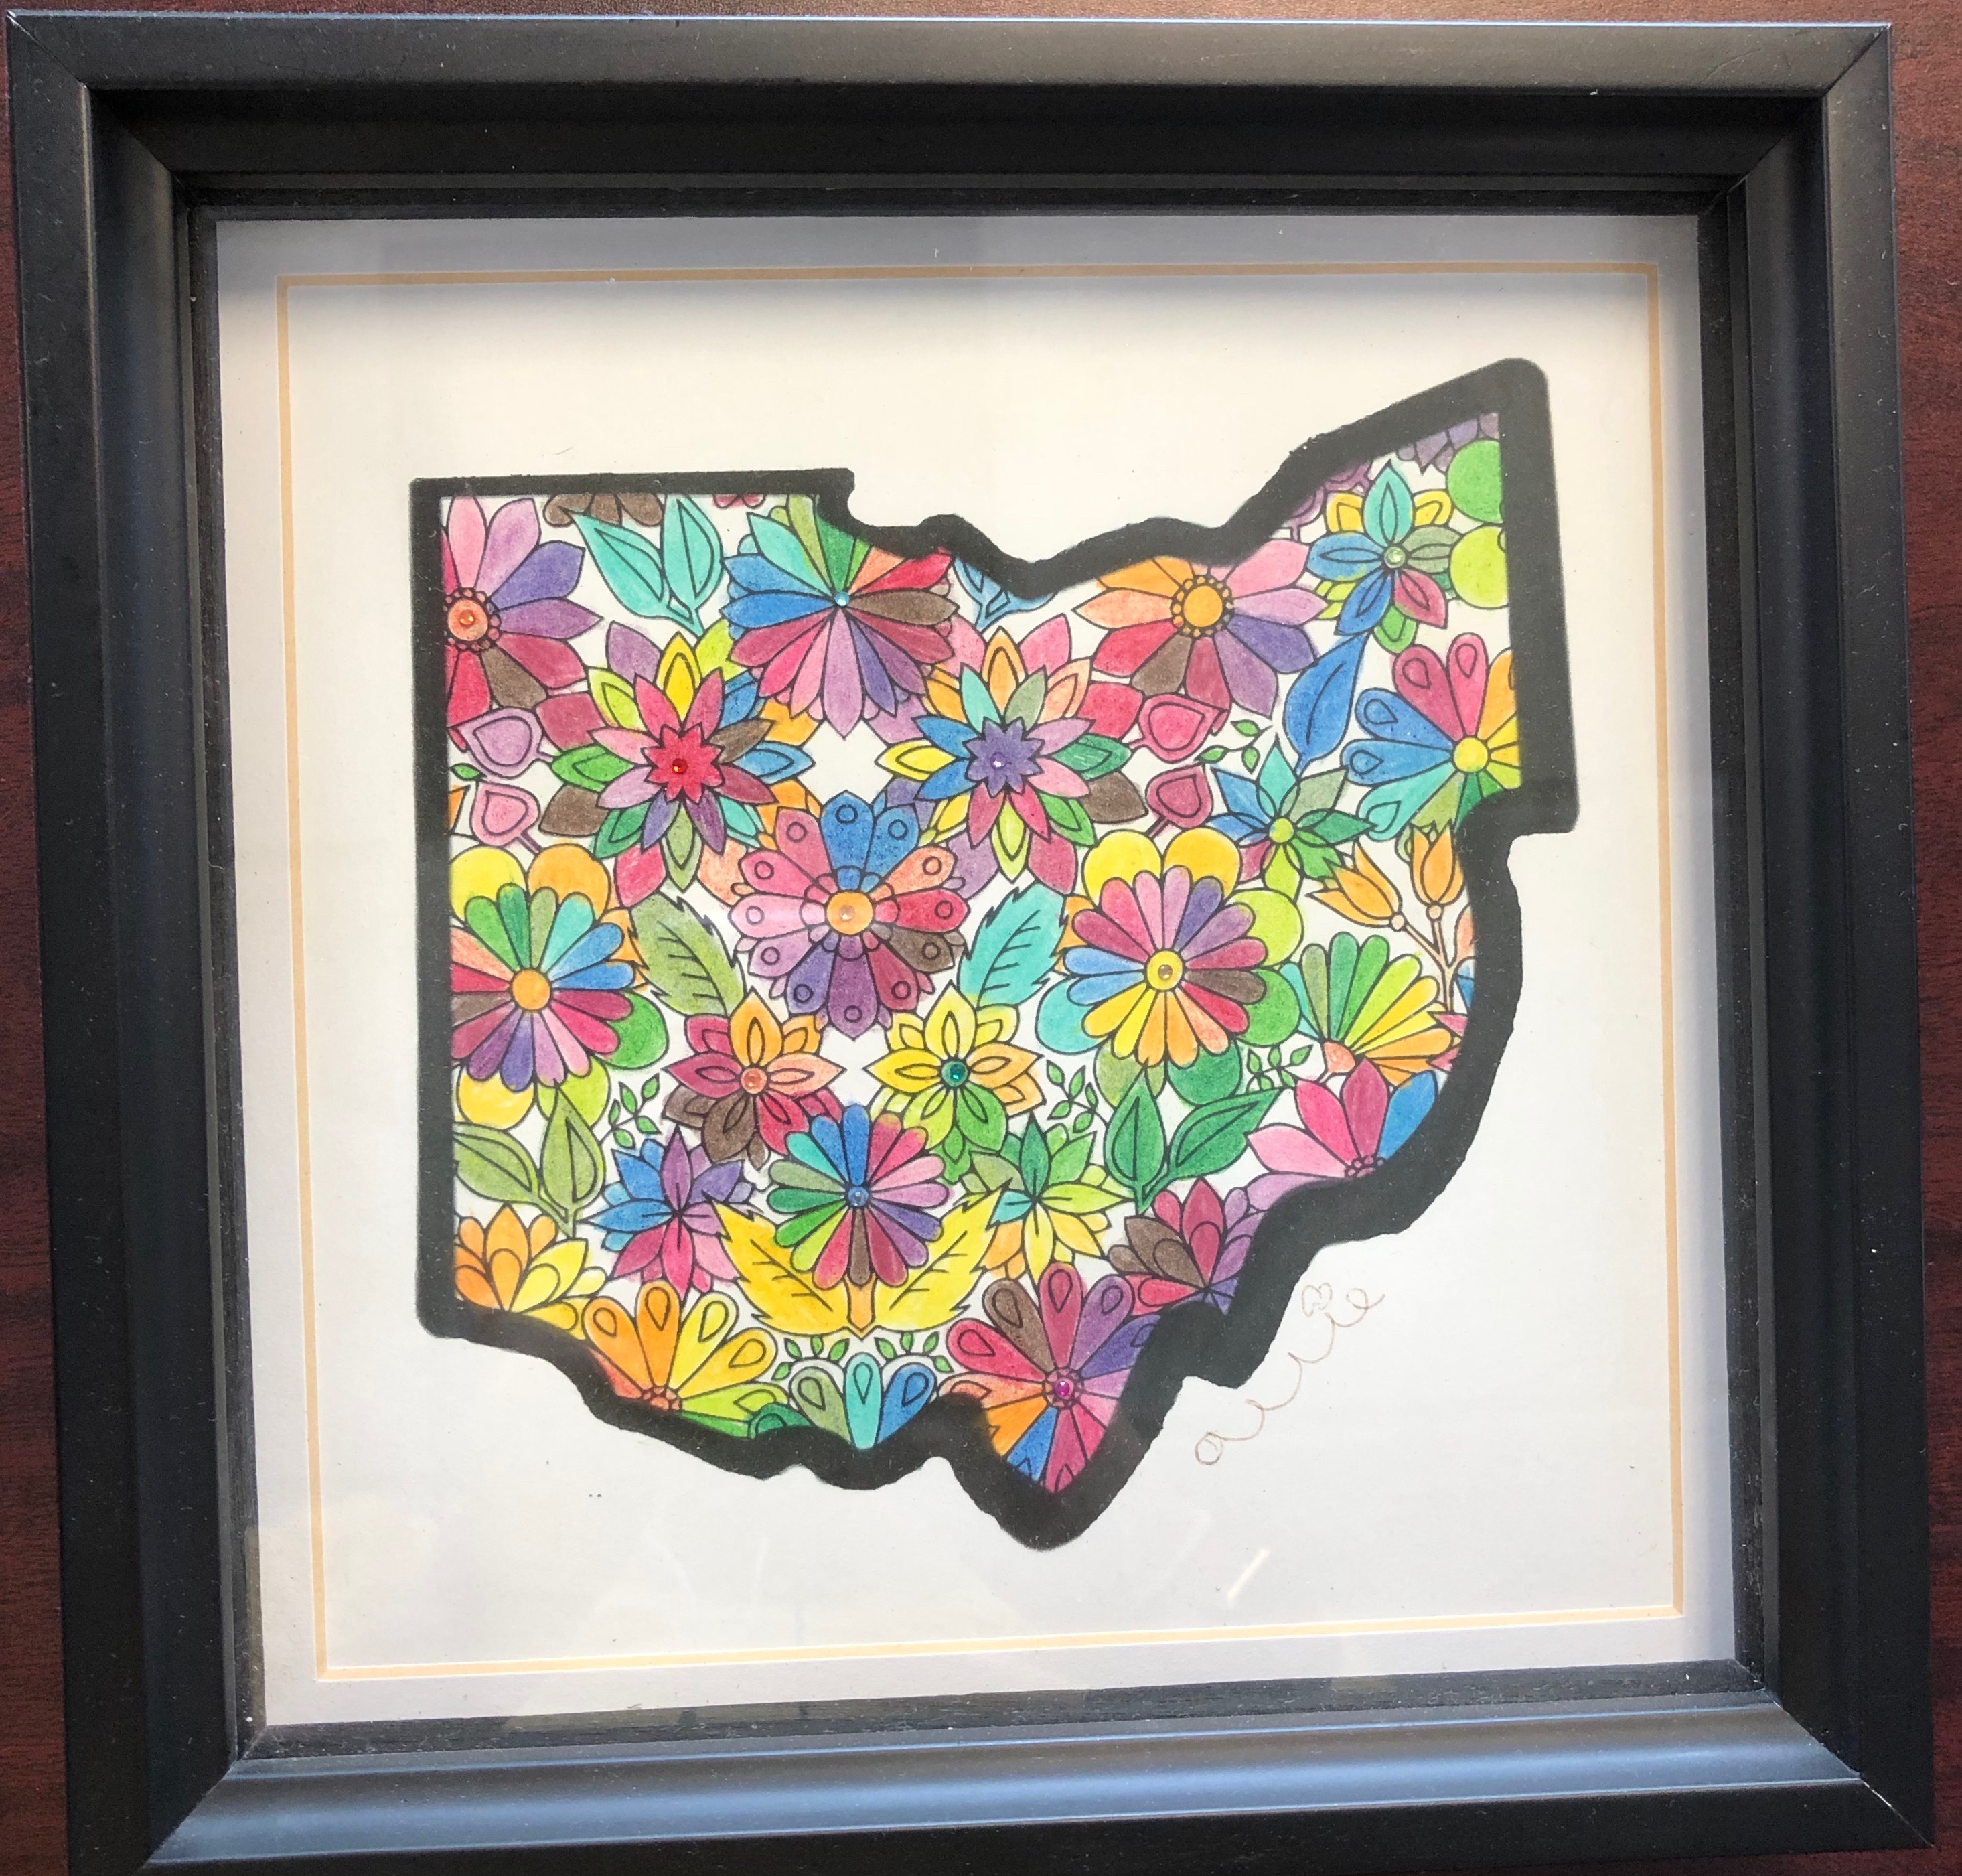 Ohio Framed Print | Artful21